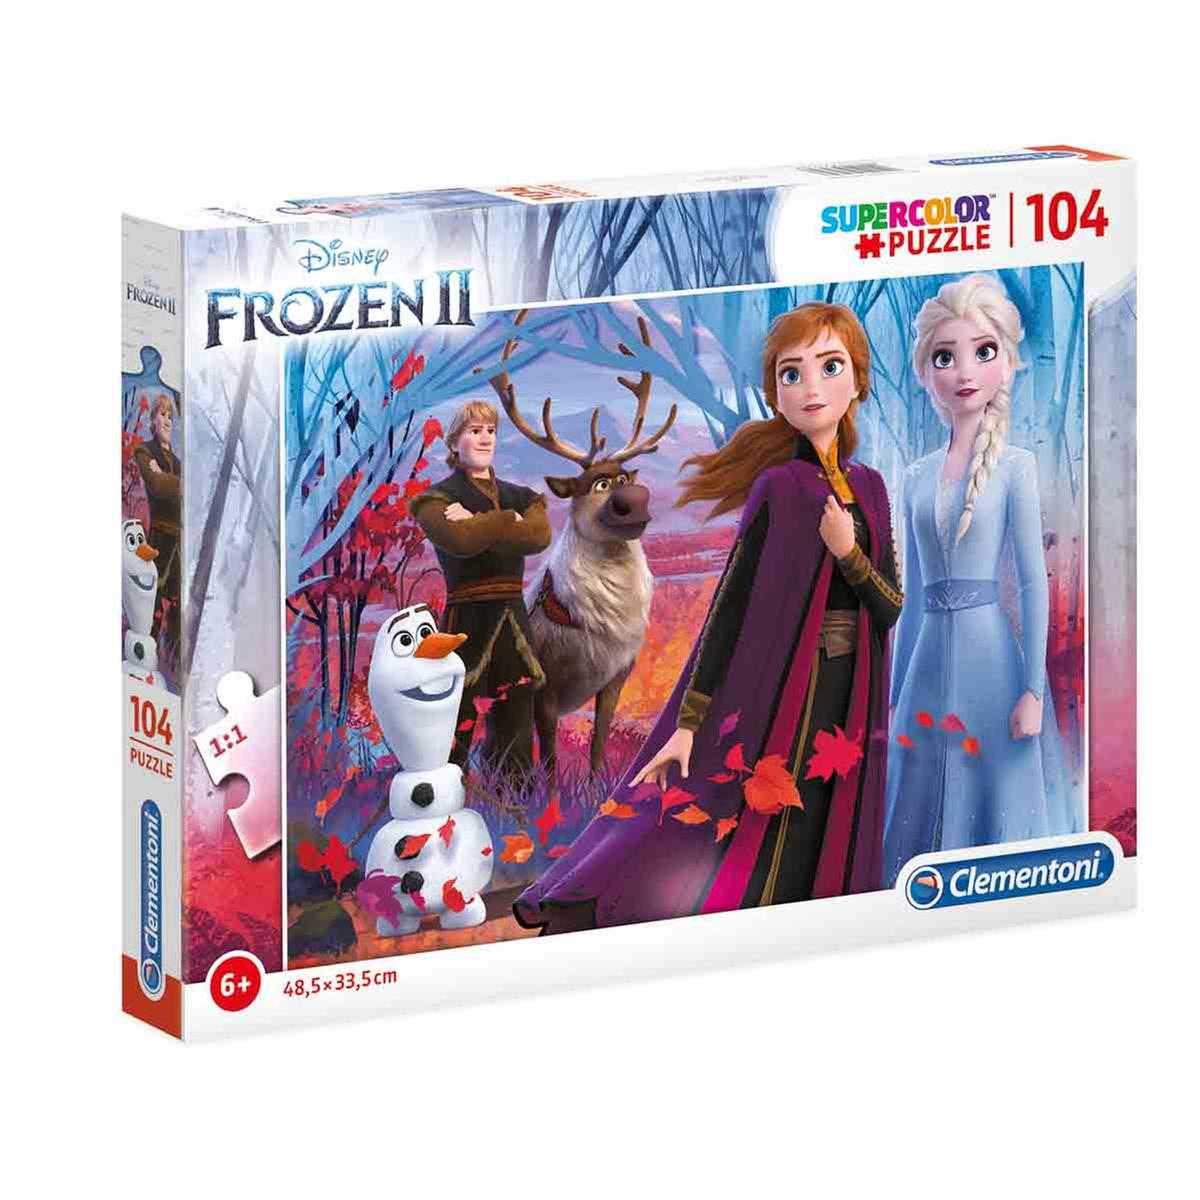 Jogo Frozen 2 Jigsaw